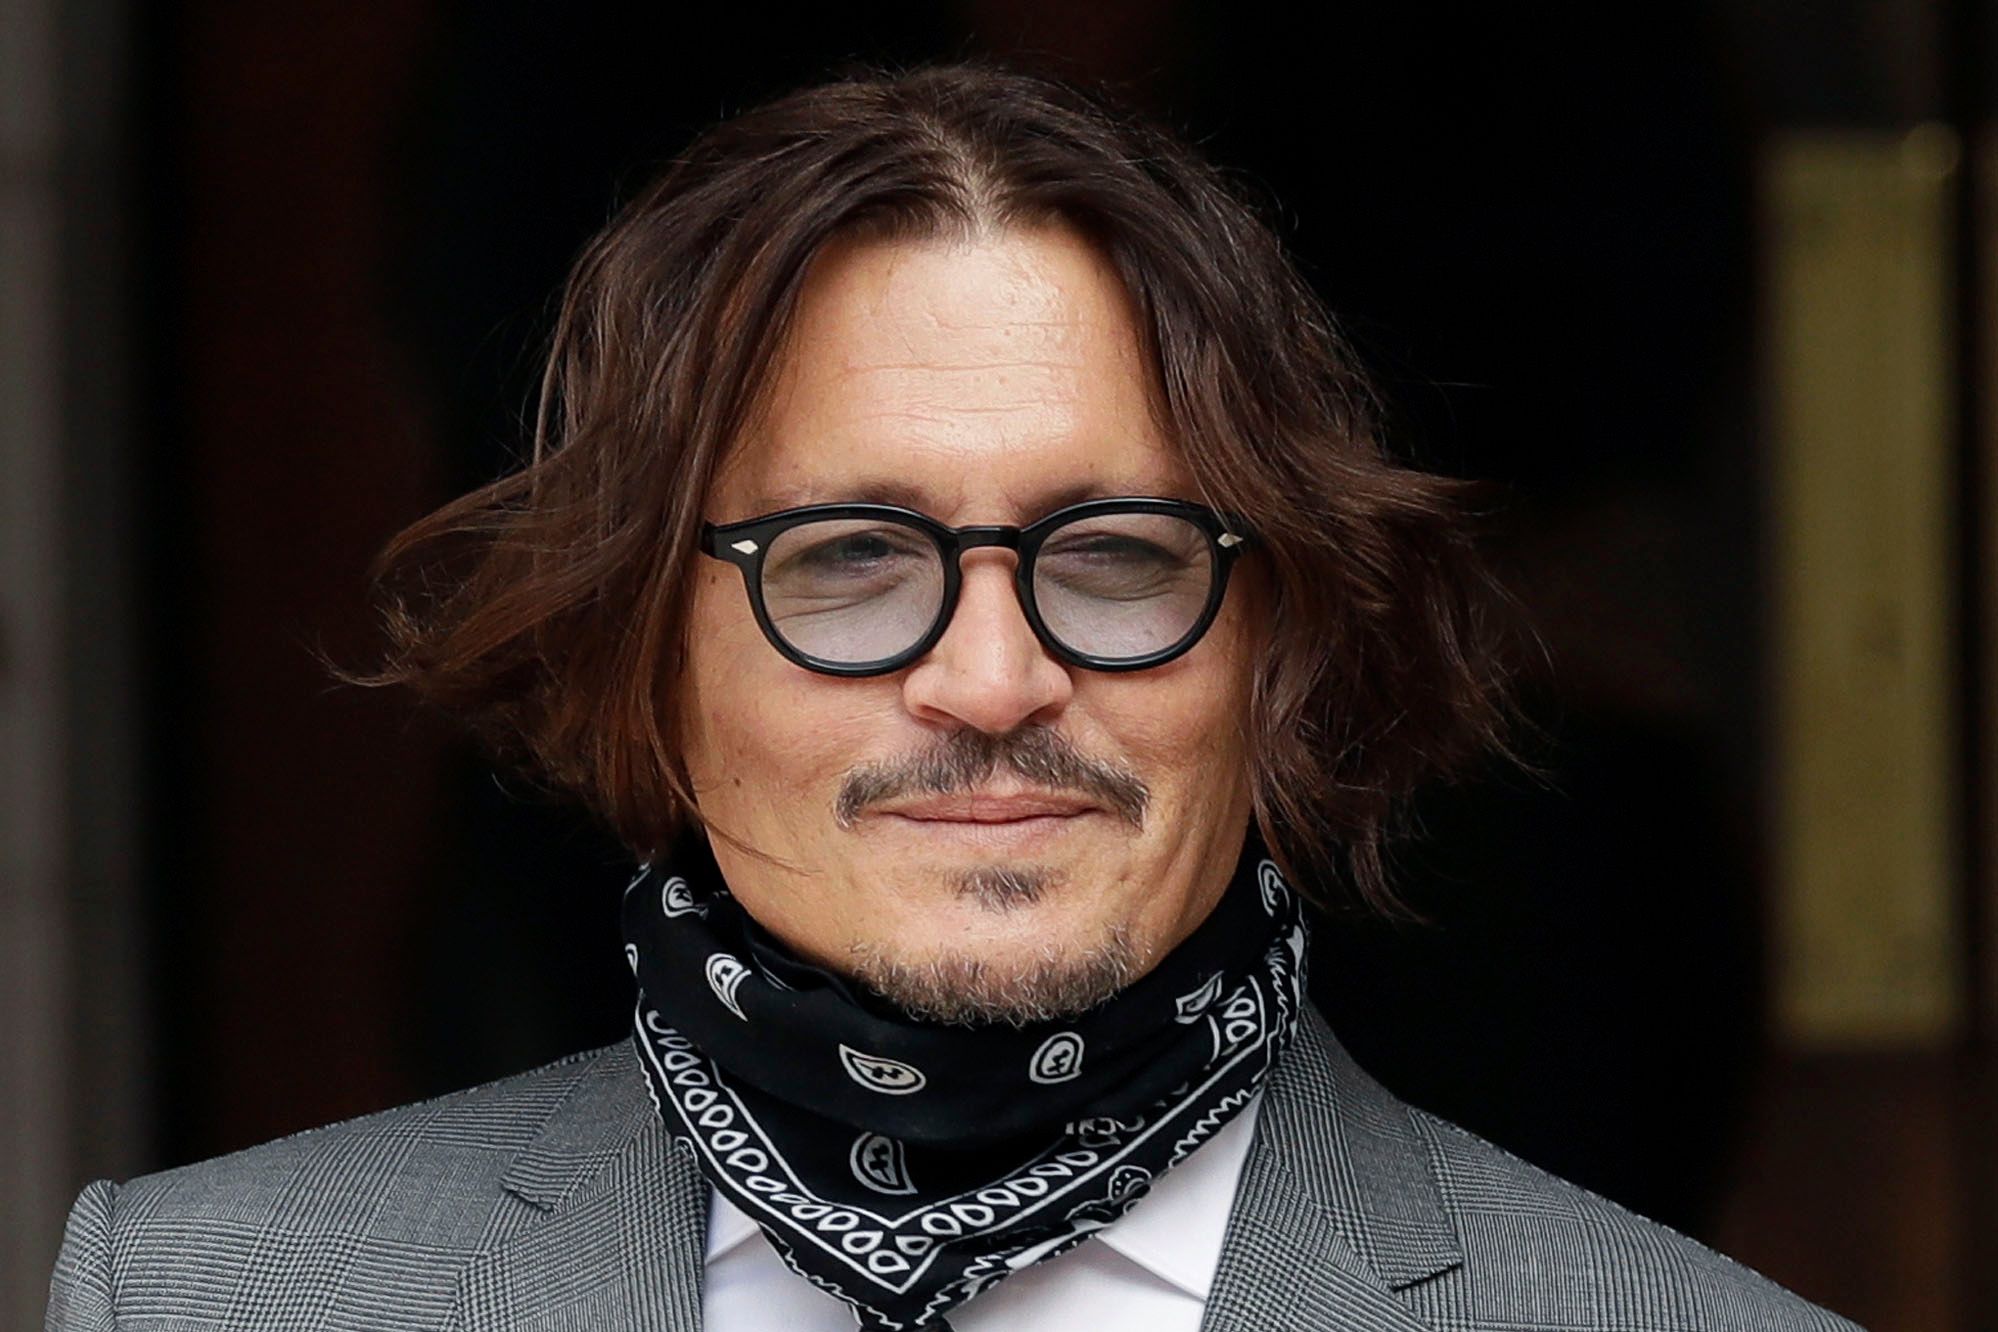 Johnny Depp agradece prémio com fotografia insólita